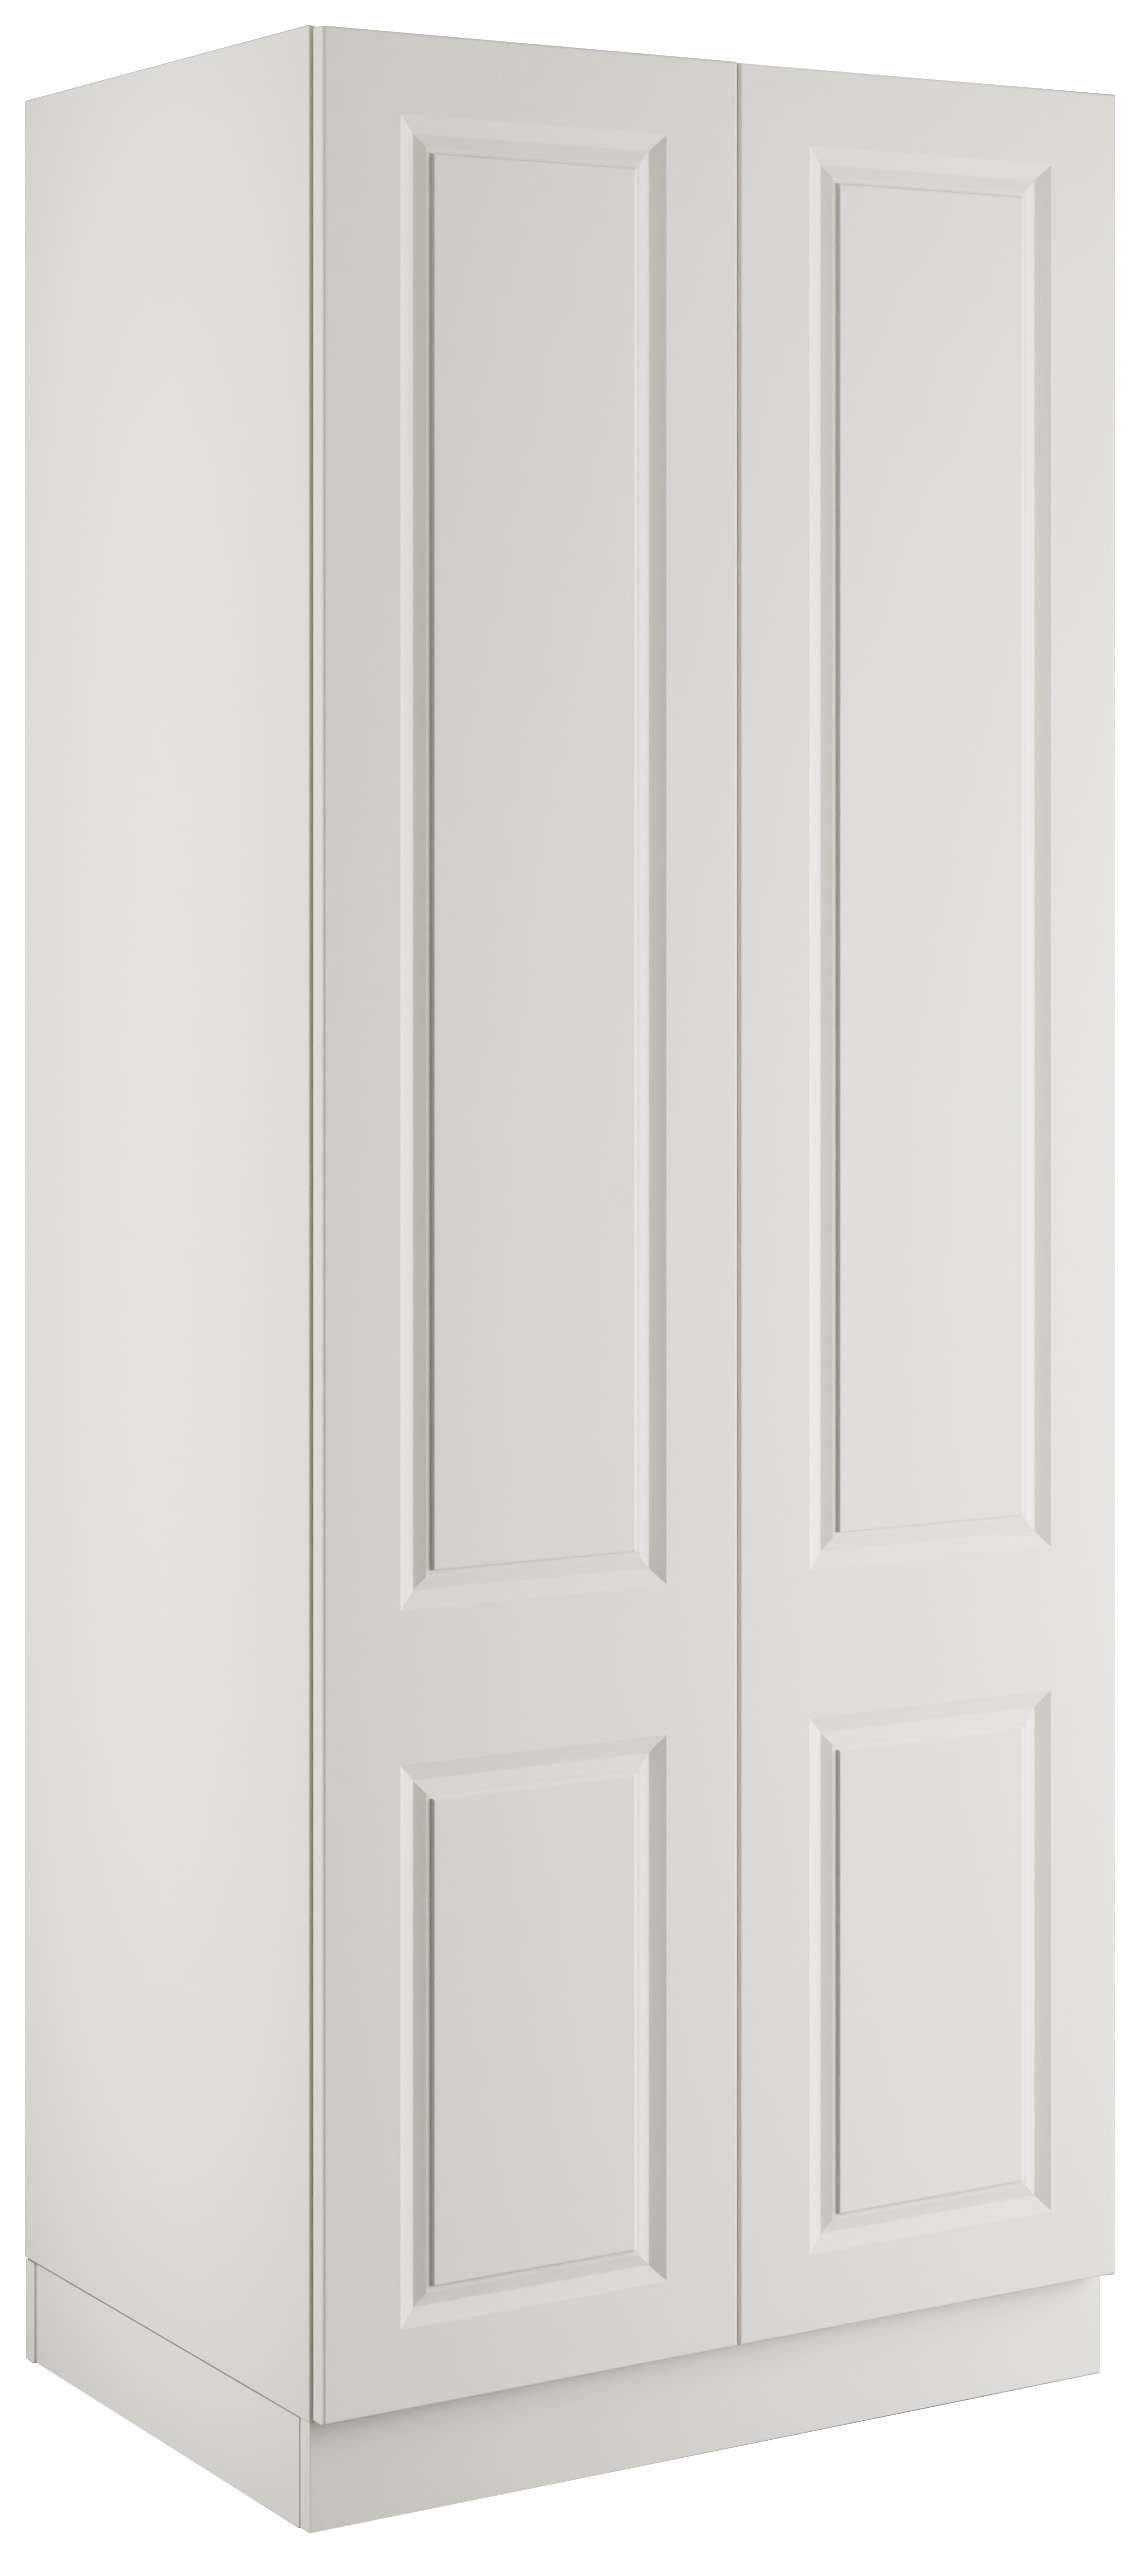 Harrogate White Double Wardrobe with Single Rail - 900 x 2260 x 608mm